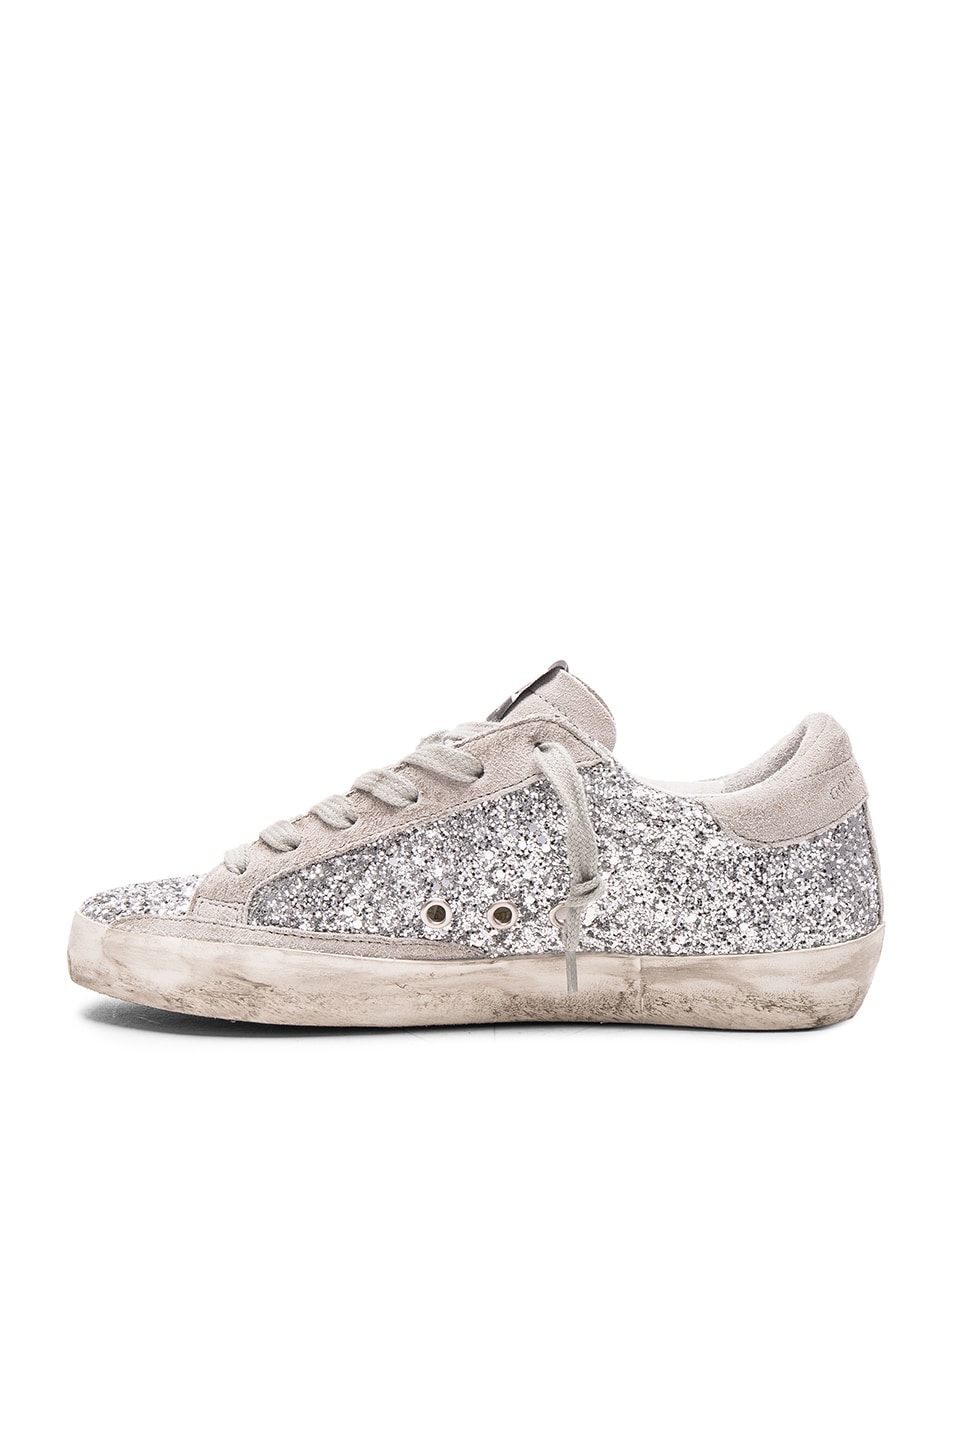 Golden Goose Glitter Superstar Low Sneakers in Silver Moon | FWRD